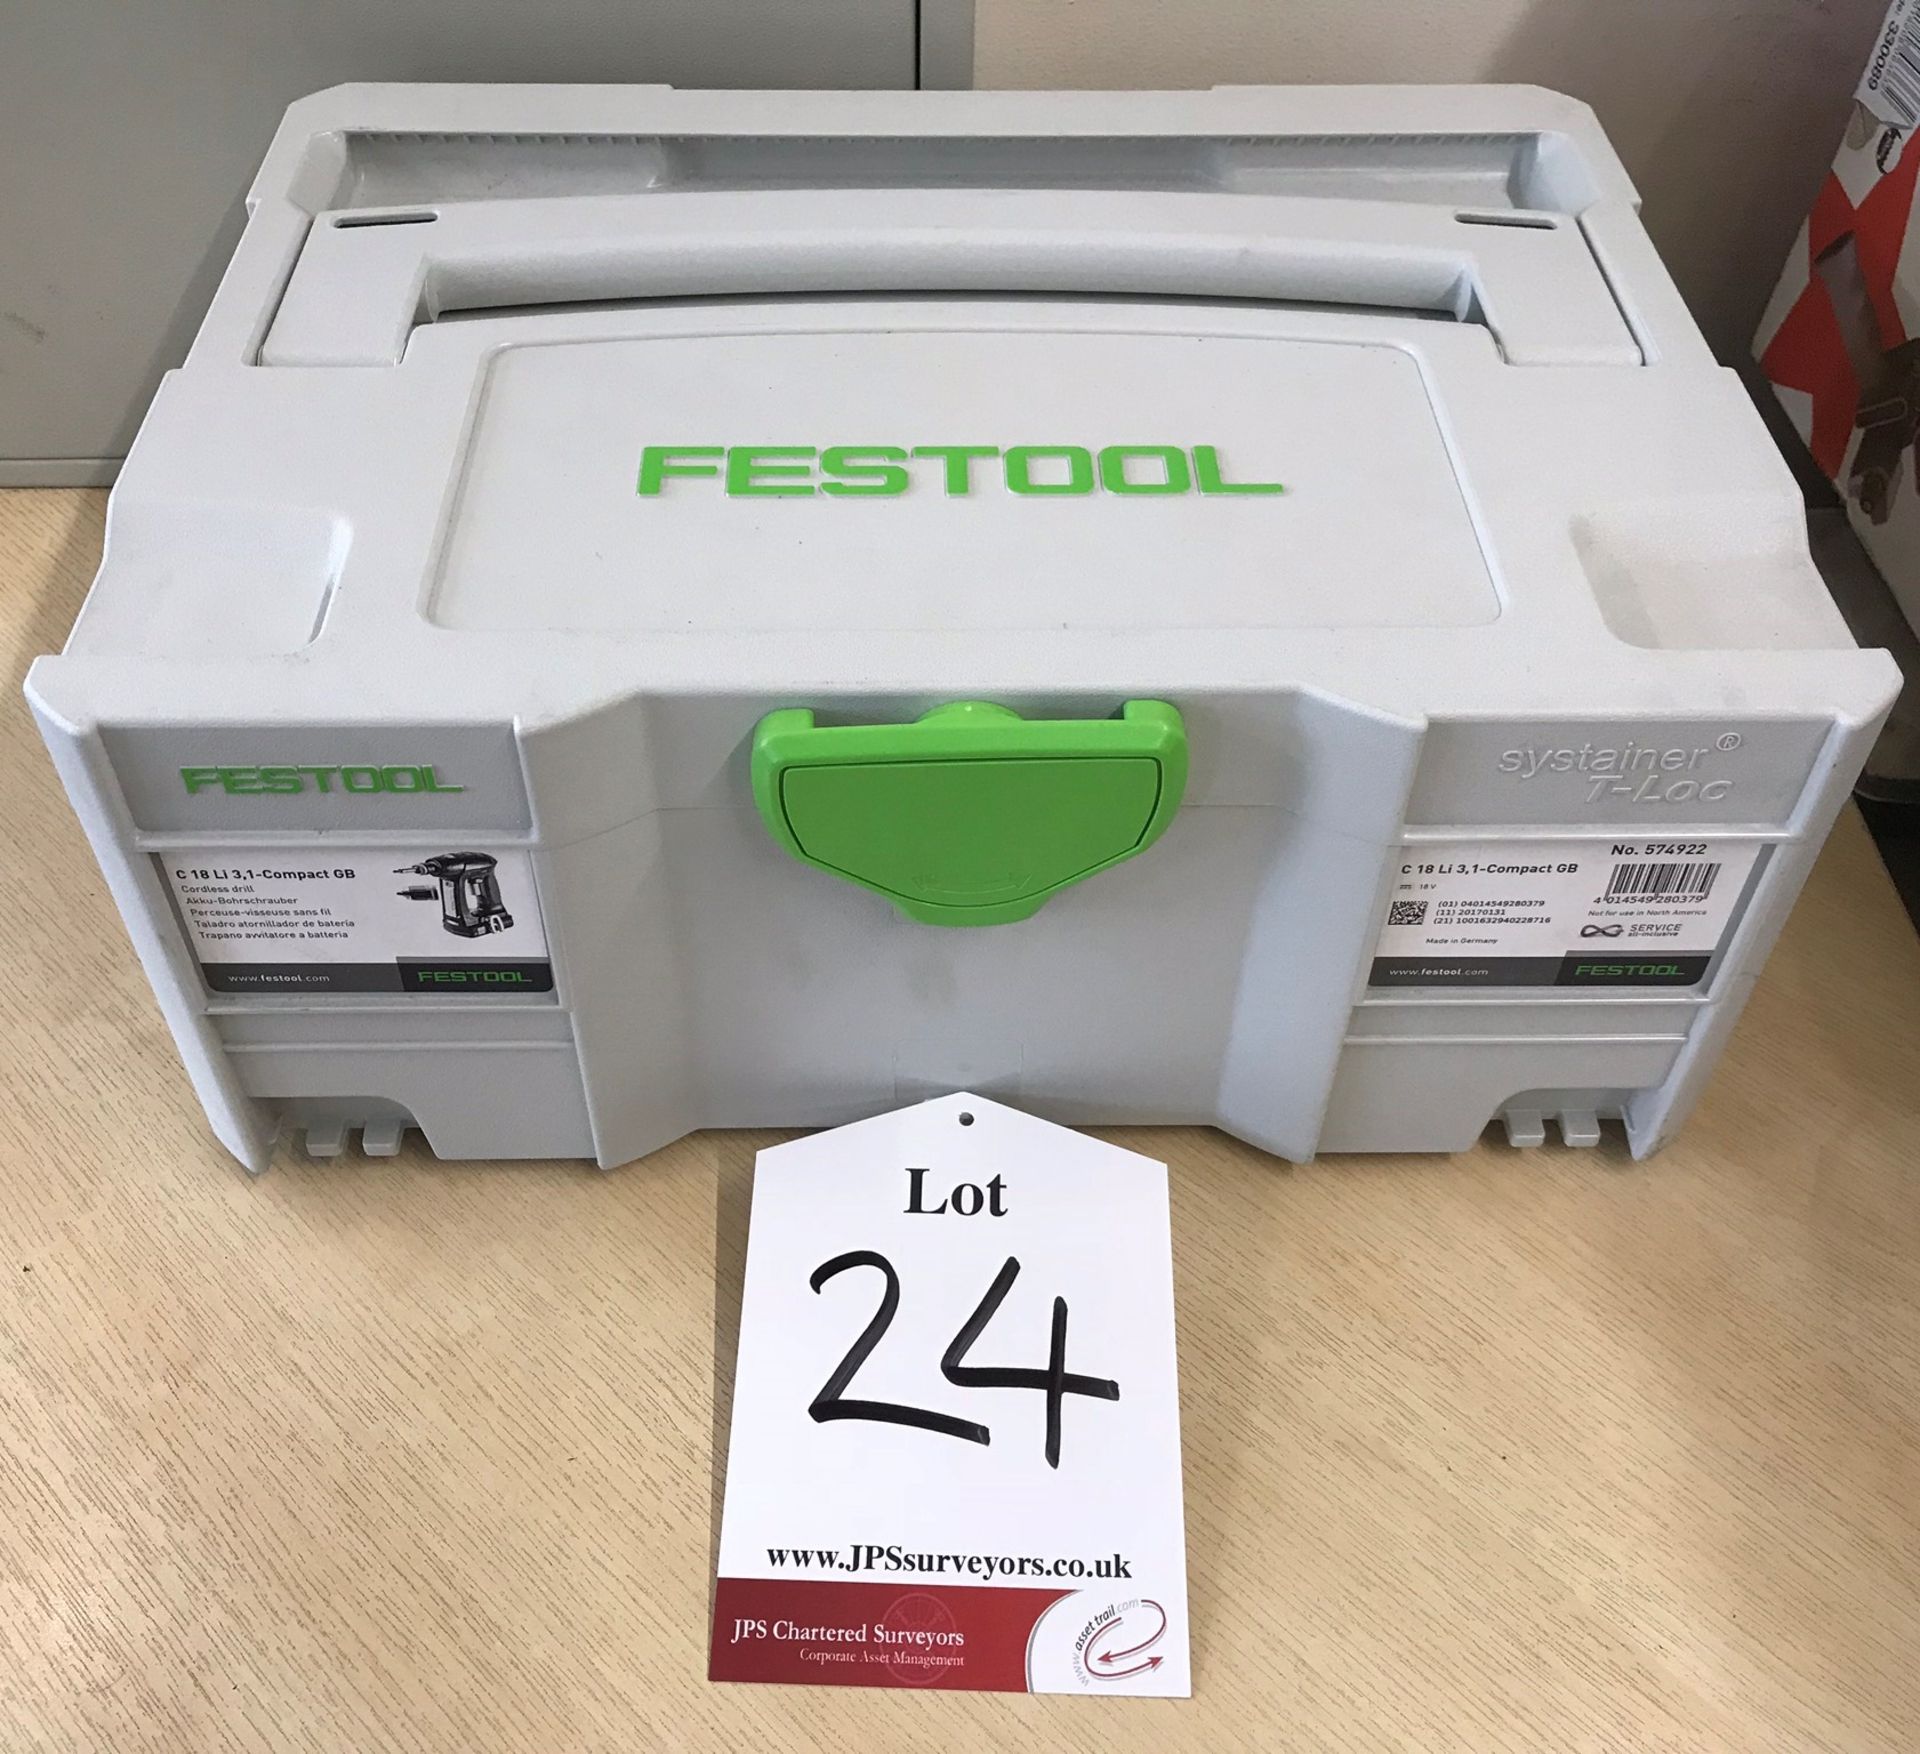 New Festool 574922 Cordless Drill C 18 Li 3,1-Compact GB, 18 V, Multi-Colour - Image 2 of 3